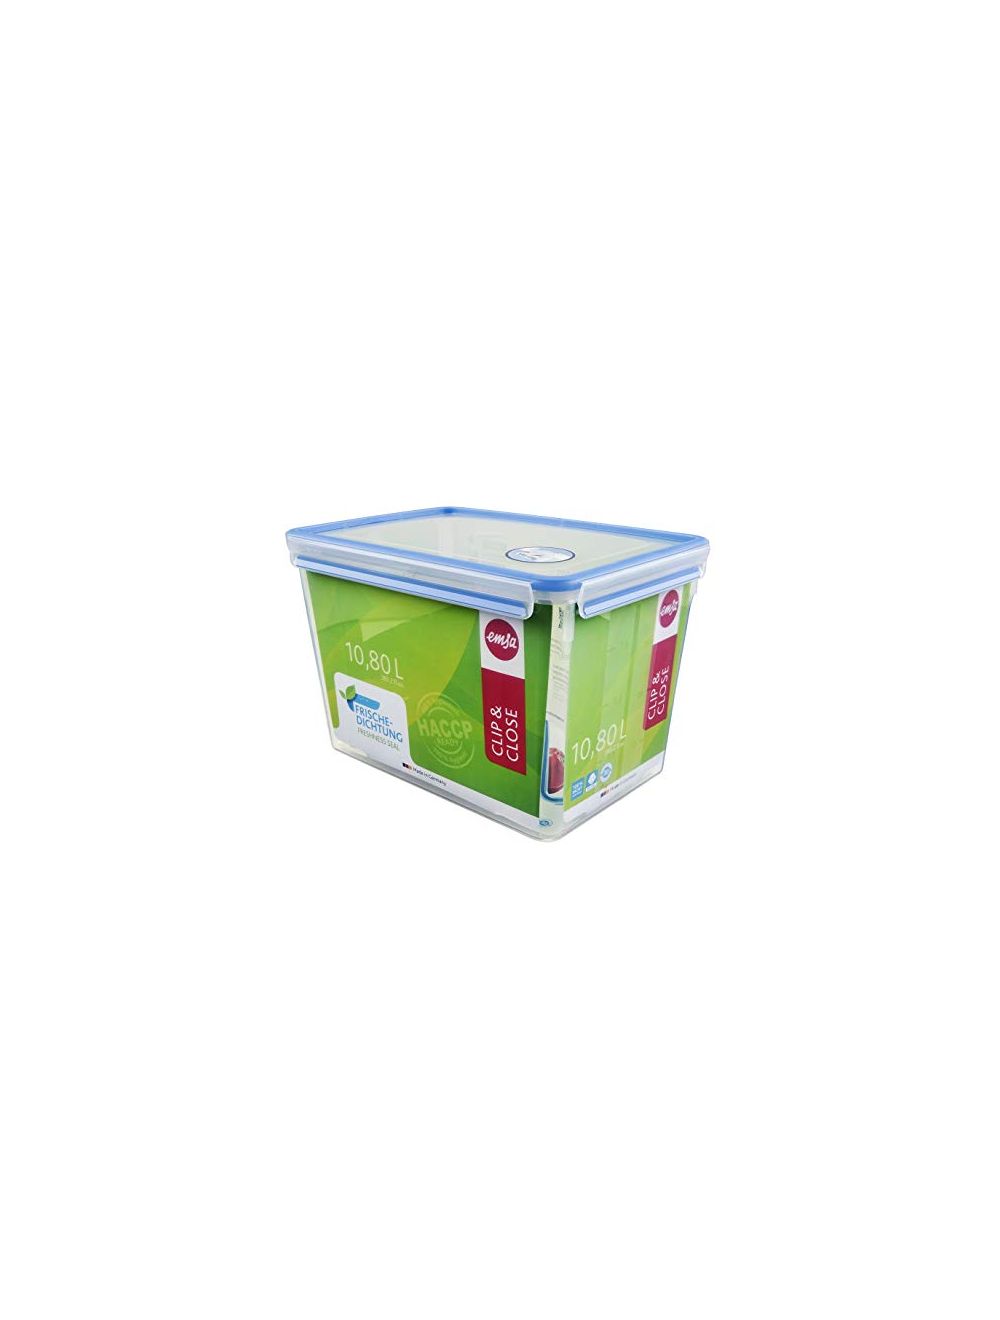 Clip & Close Rectangular Food Storage Container With Lid - Transparent/Blue 10.8L